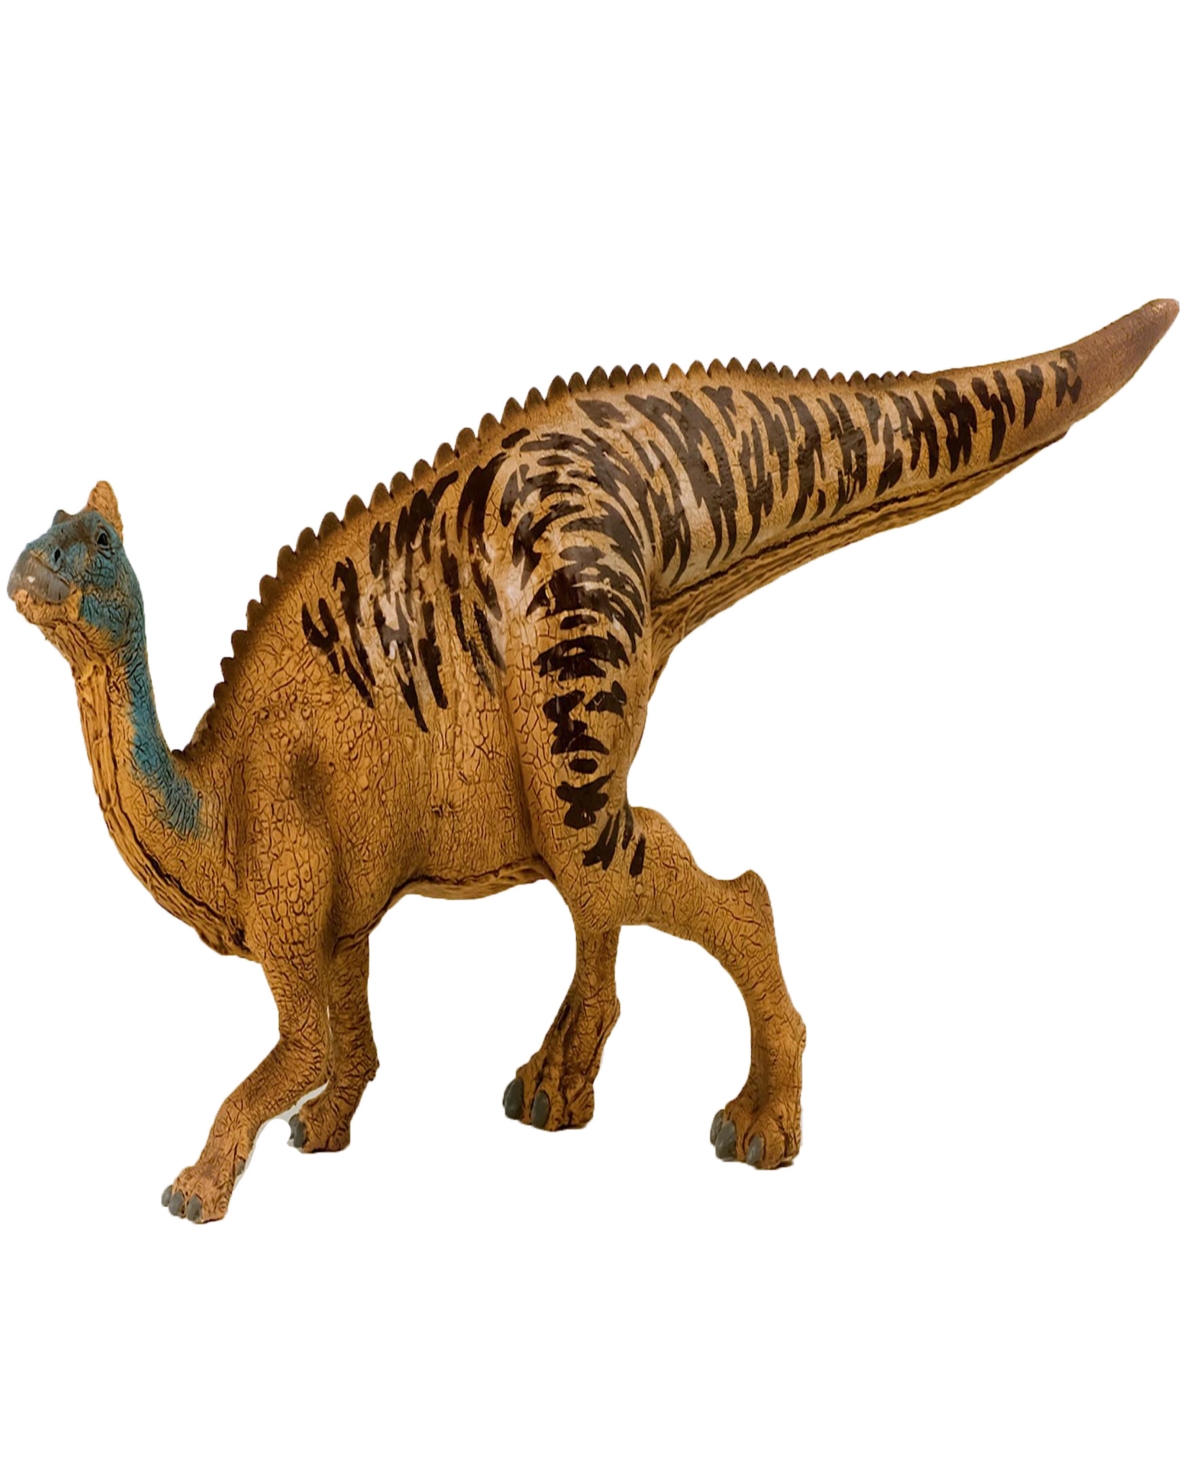 Schleich Dinosaurs Edmontosaurus Action Figure In Multi